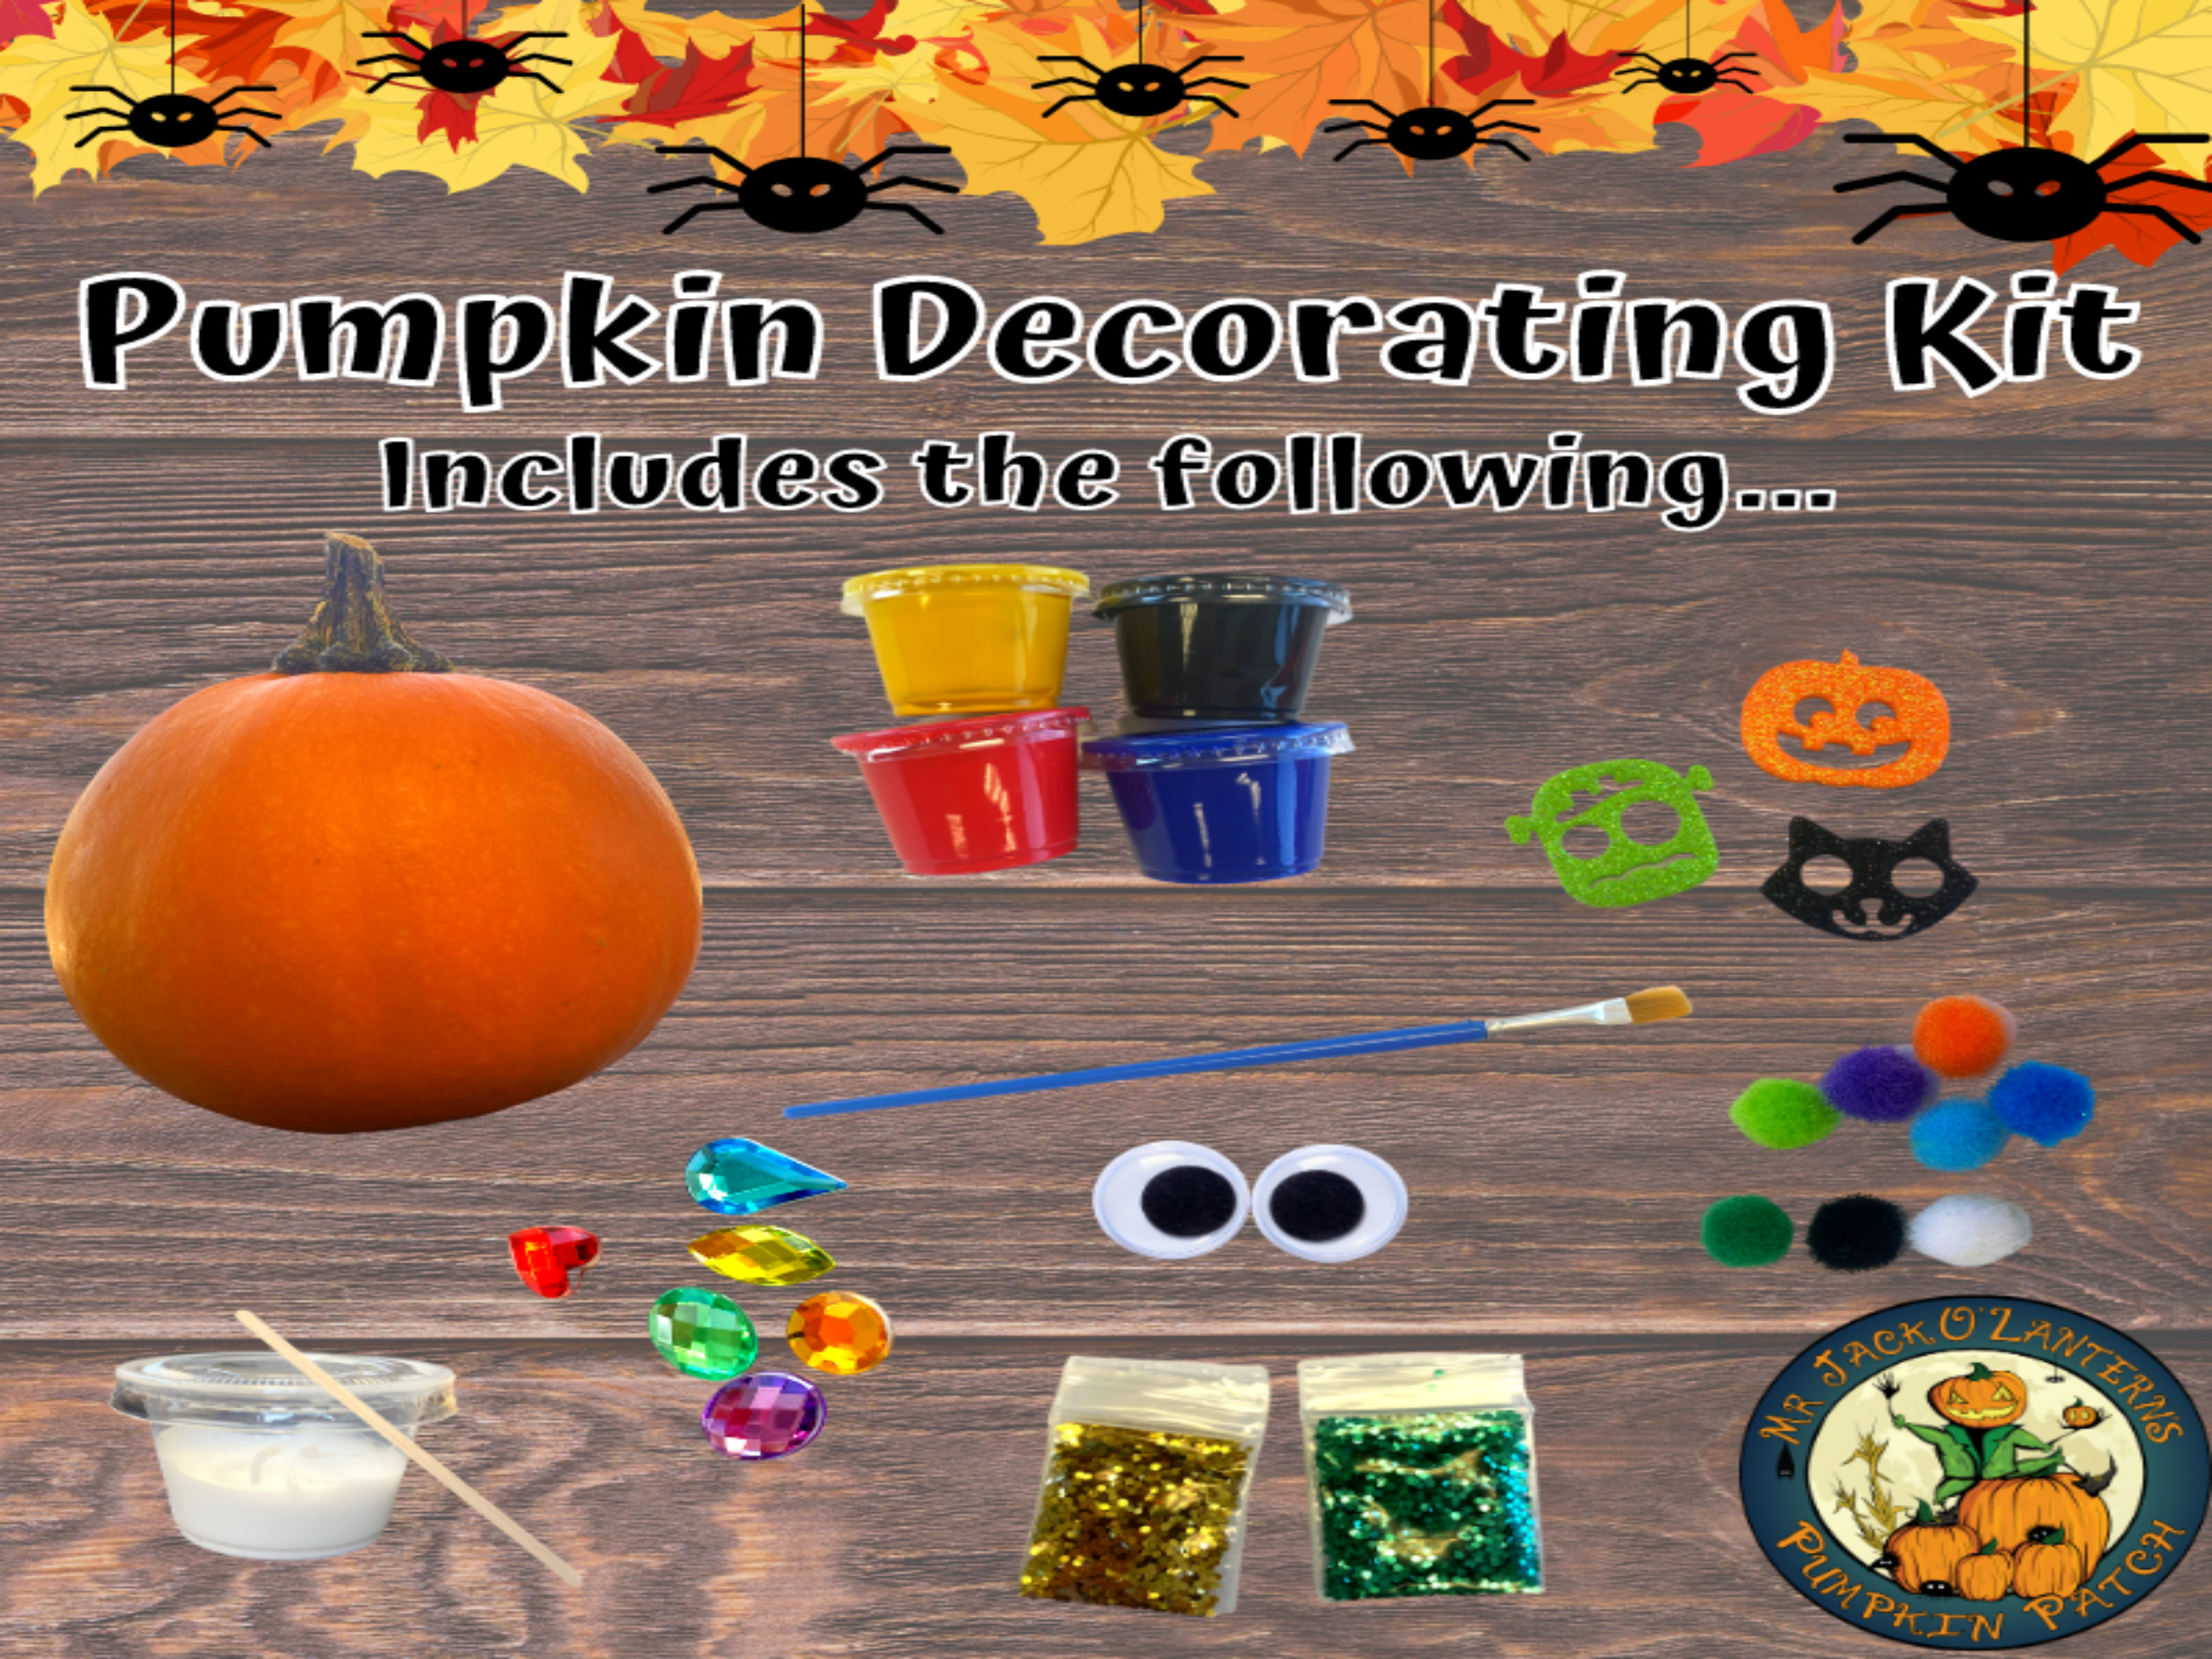 Mr. Jack O's Pumpkin Decorating Kit